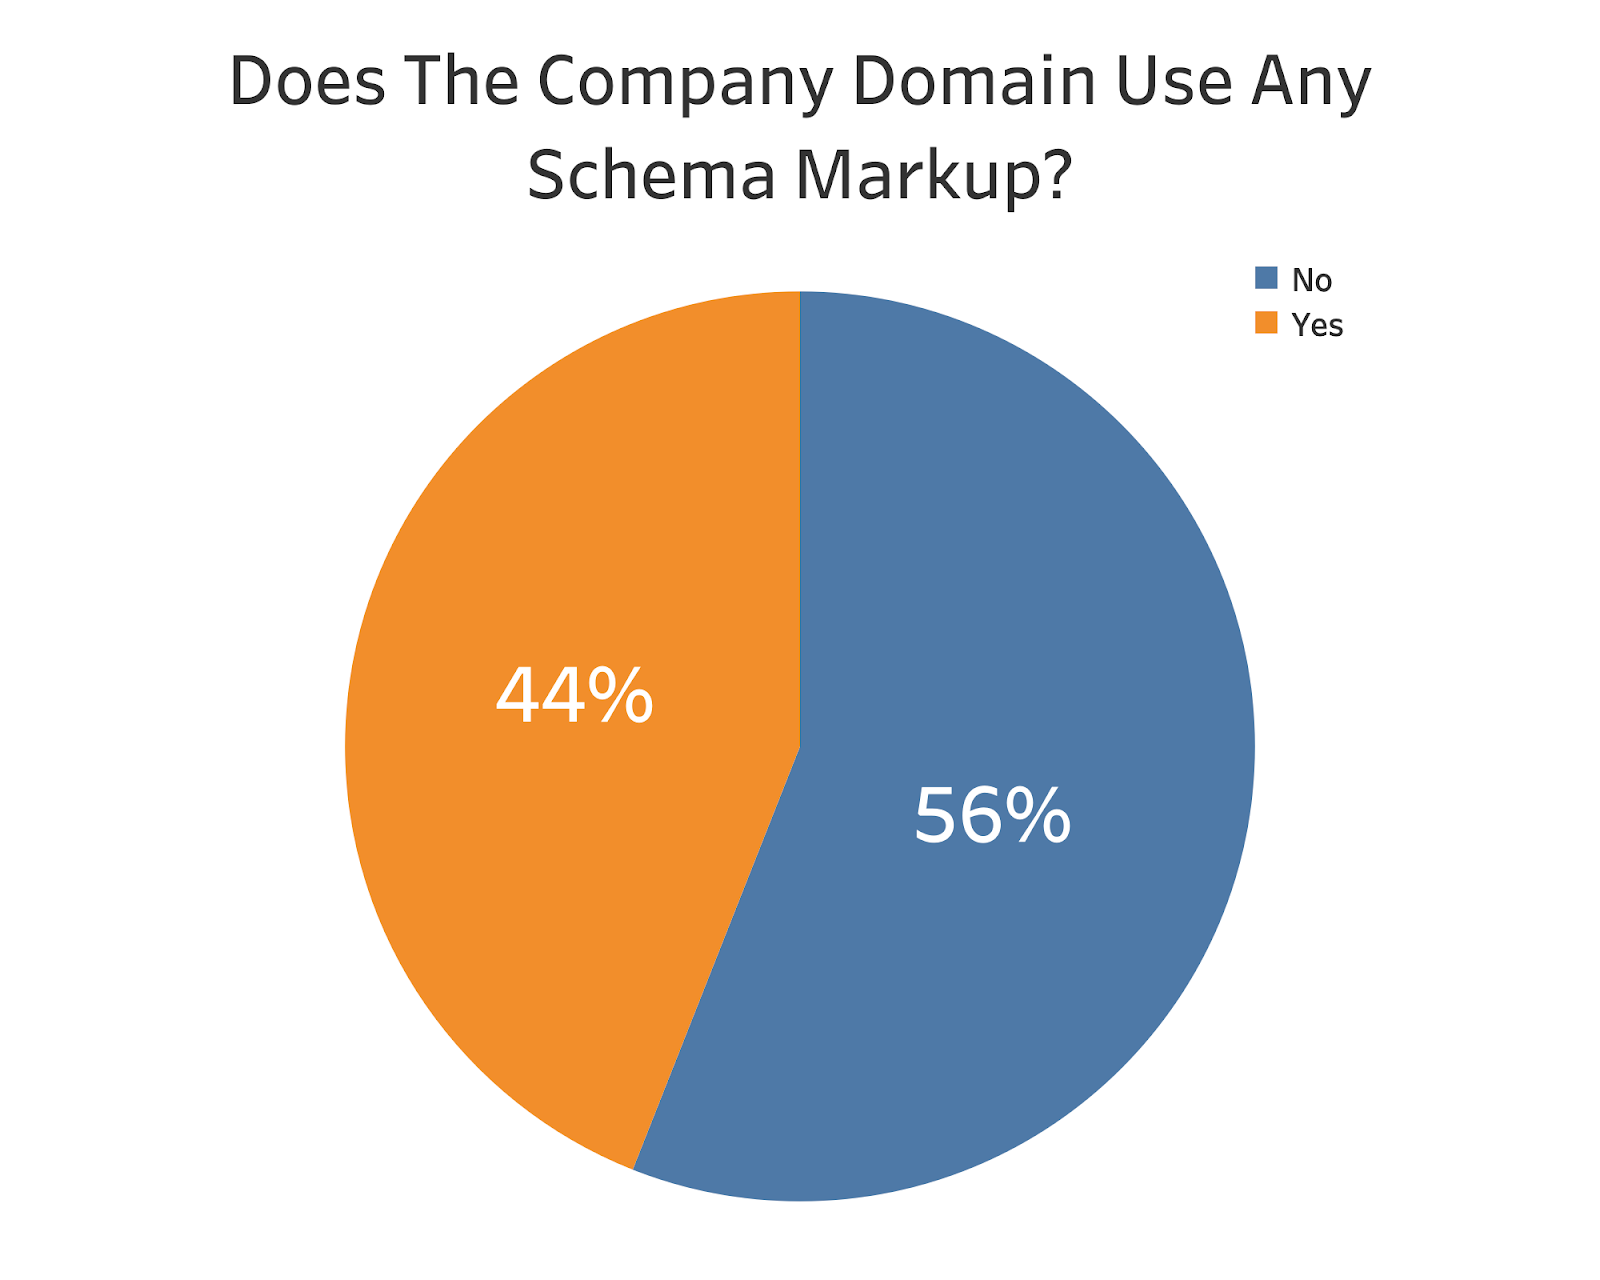 Schema Markup usage by companies